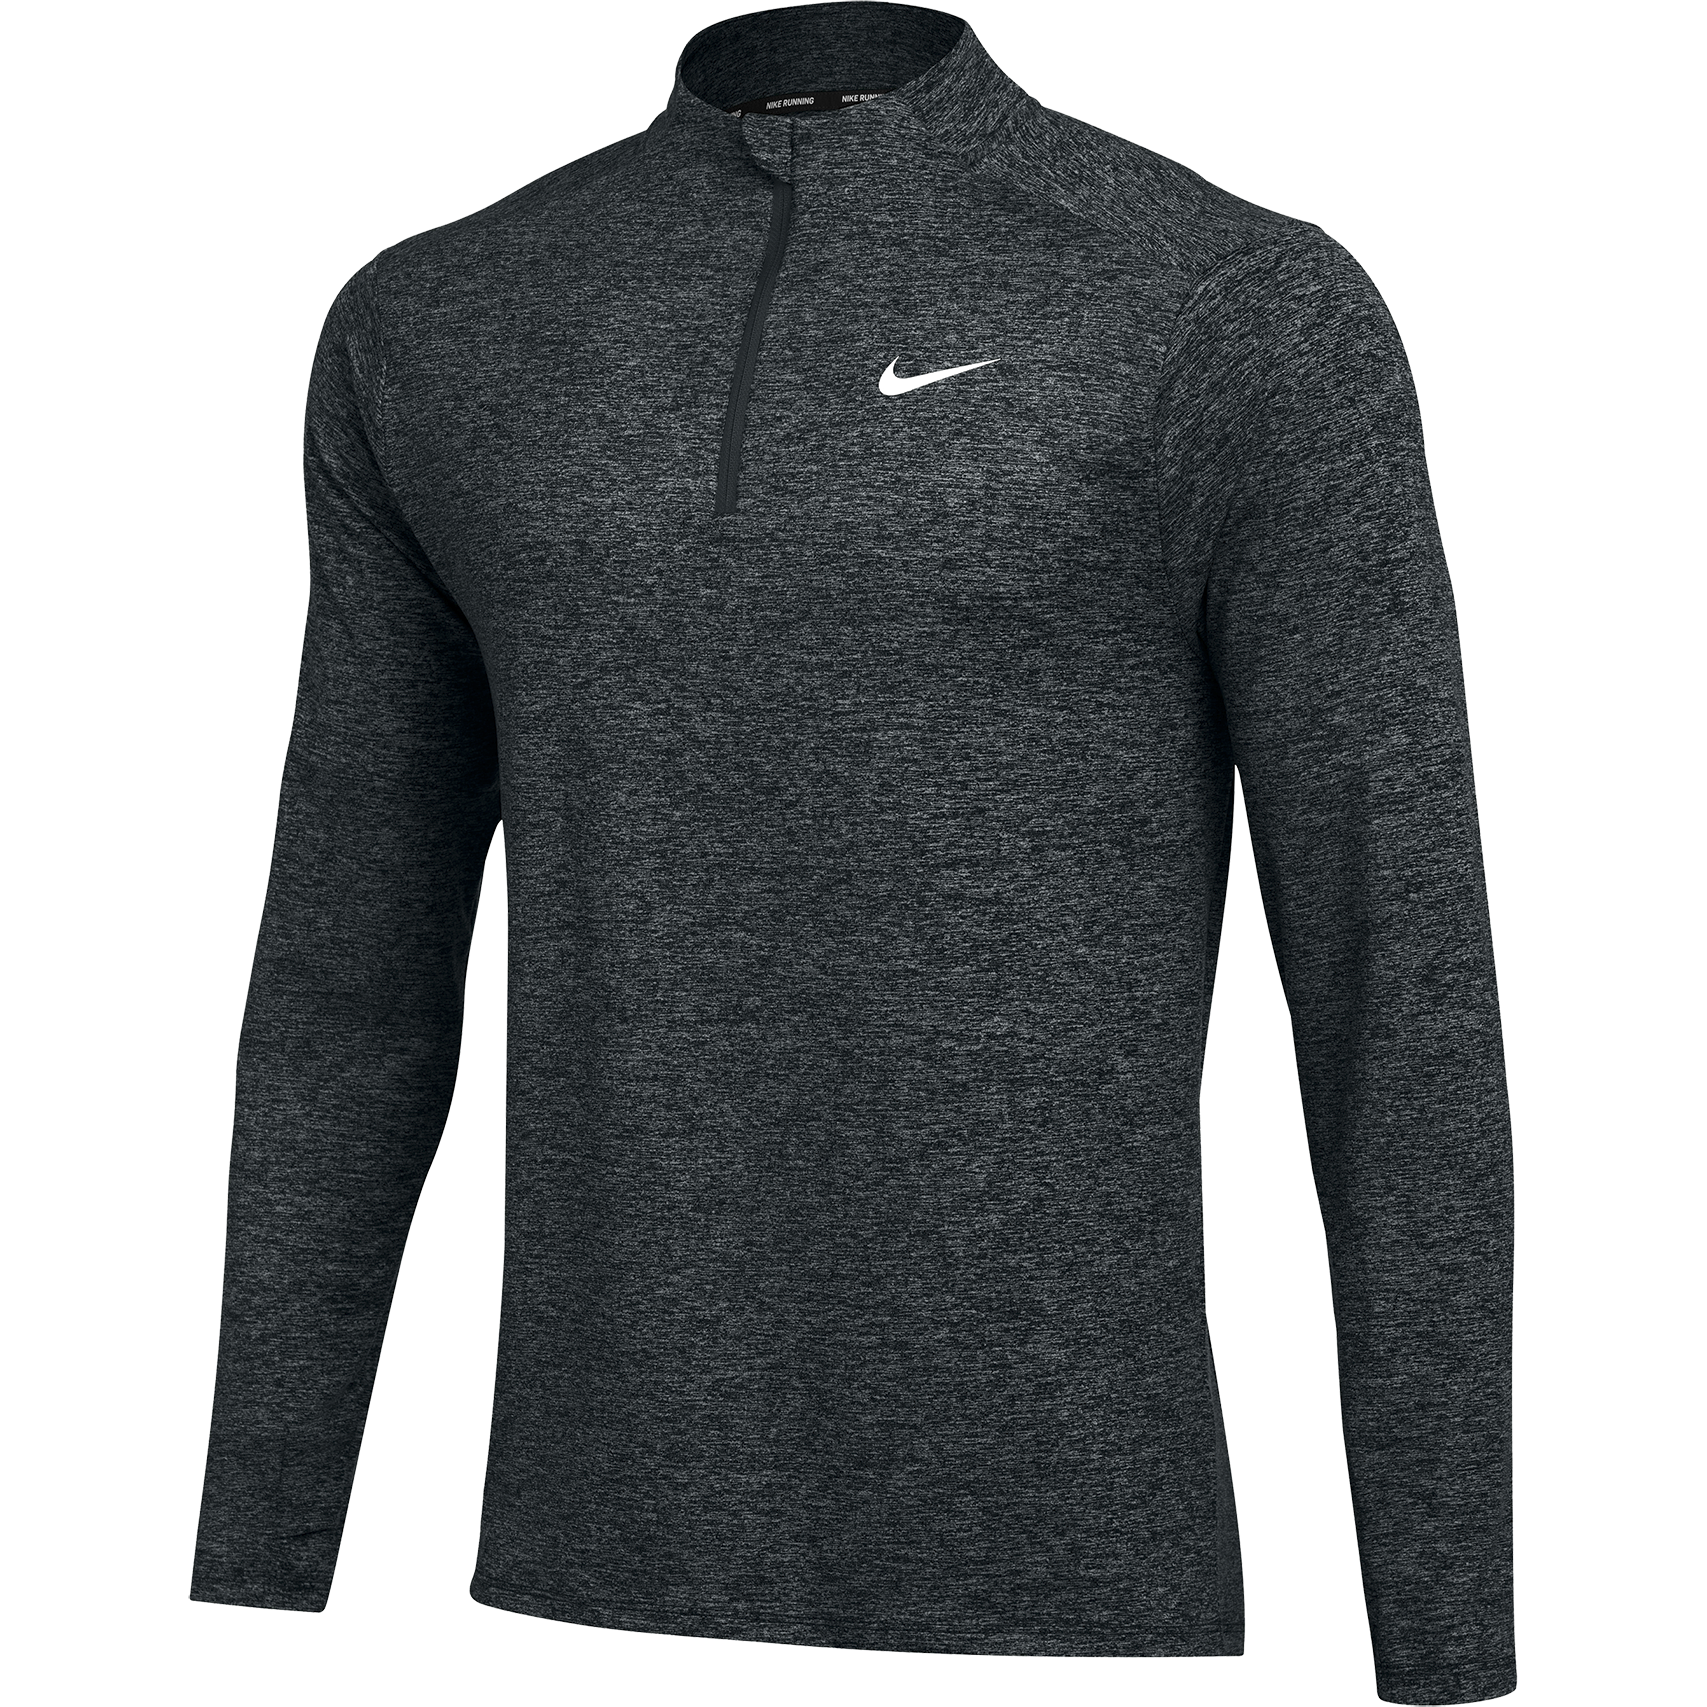 Nike-Men's Nike Dri-FIT Element 1/2 Zip Top-Black Heather-Pacers Running